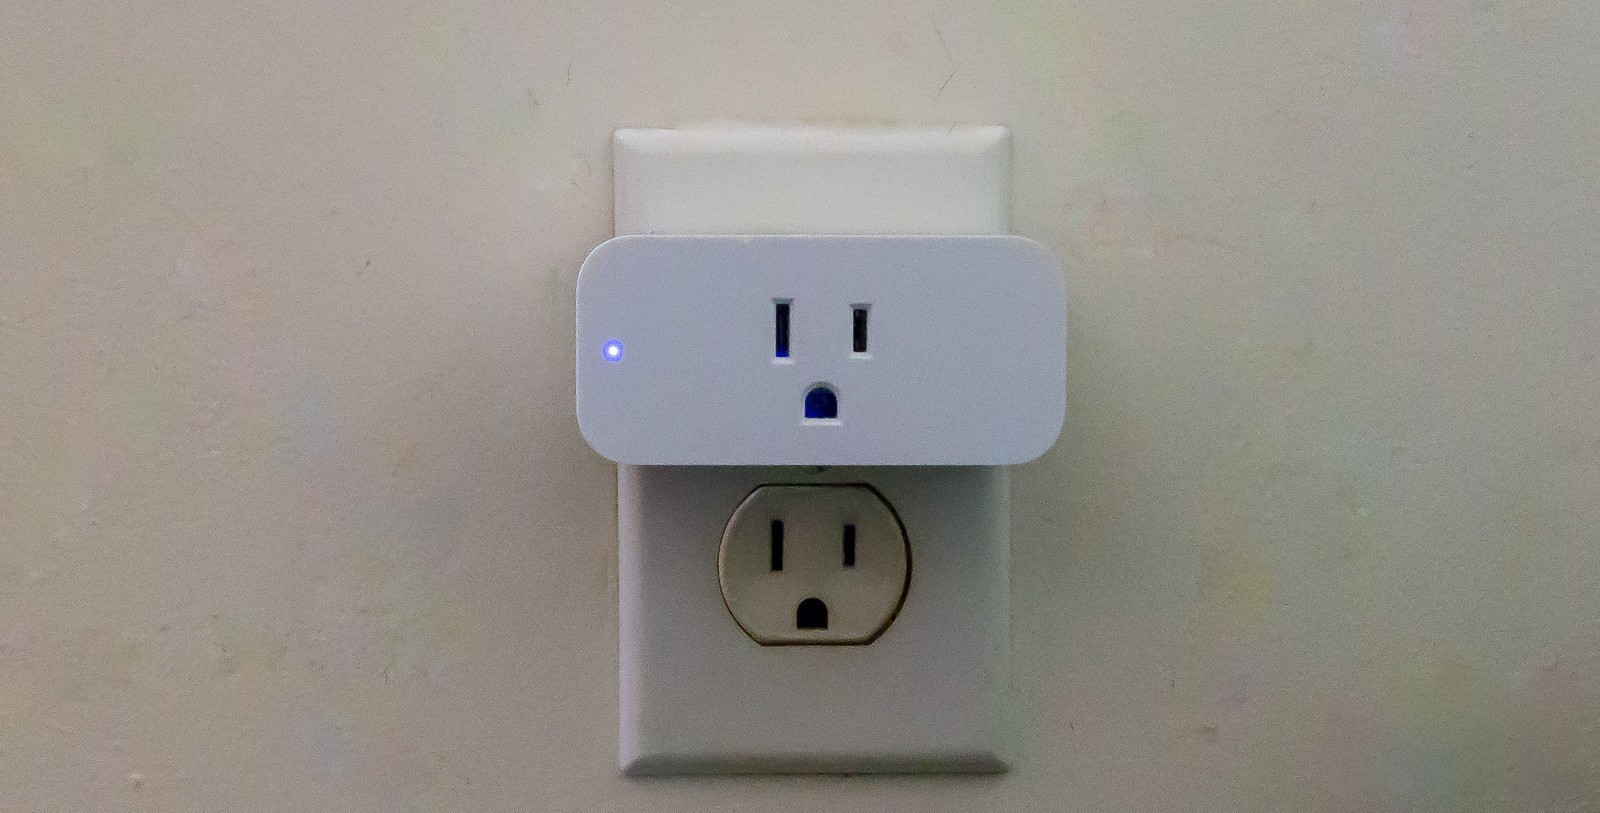 The Amazon Smart Plug plugged into a wall socket.